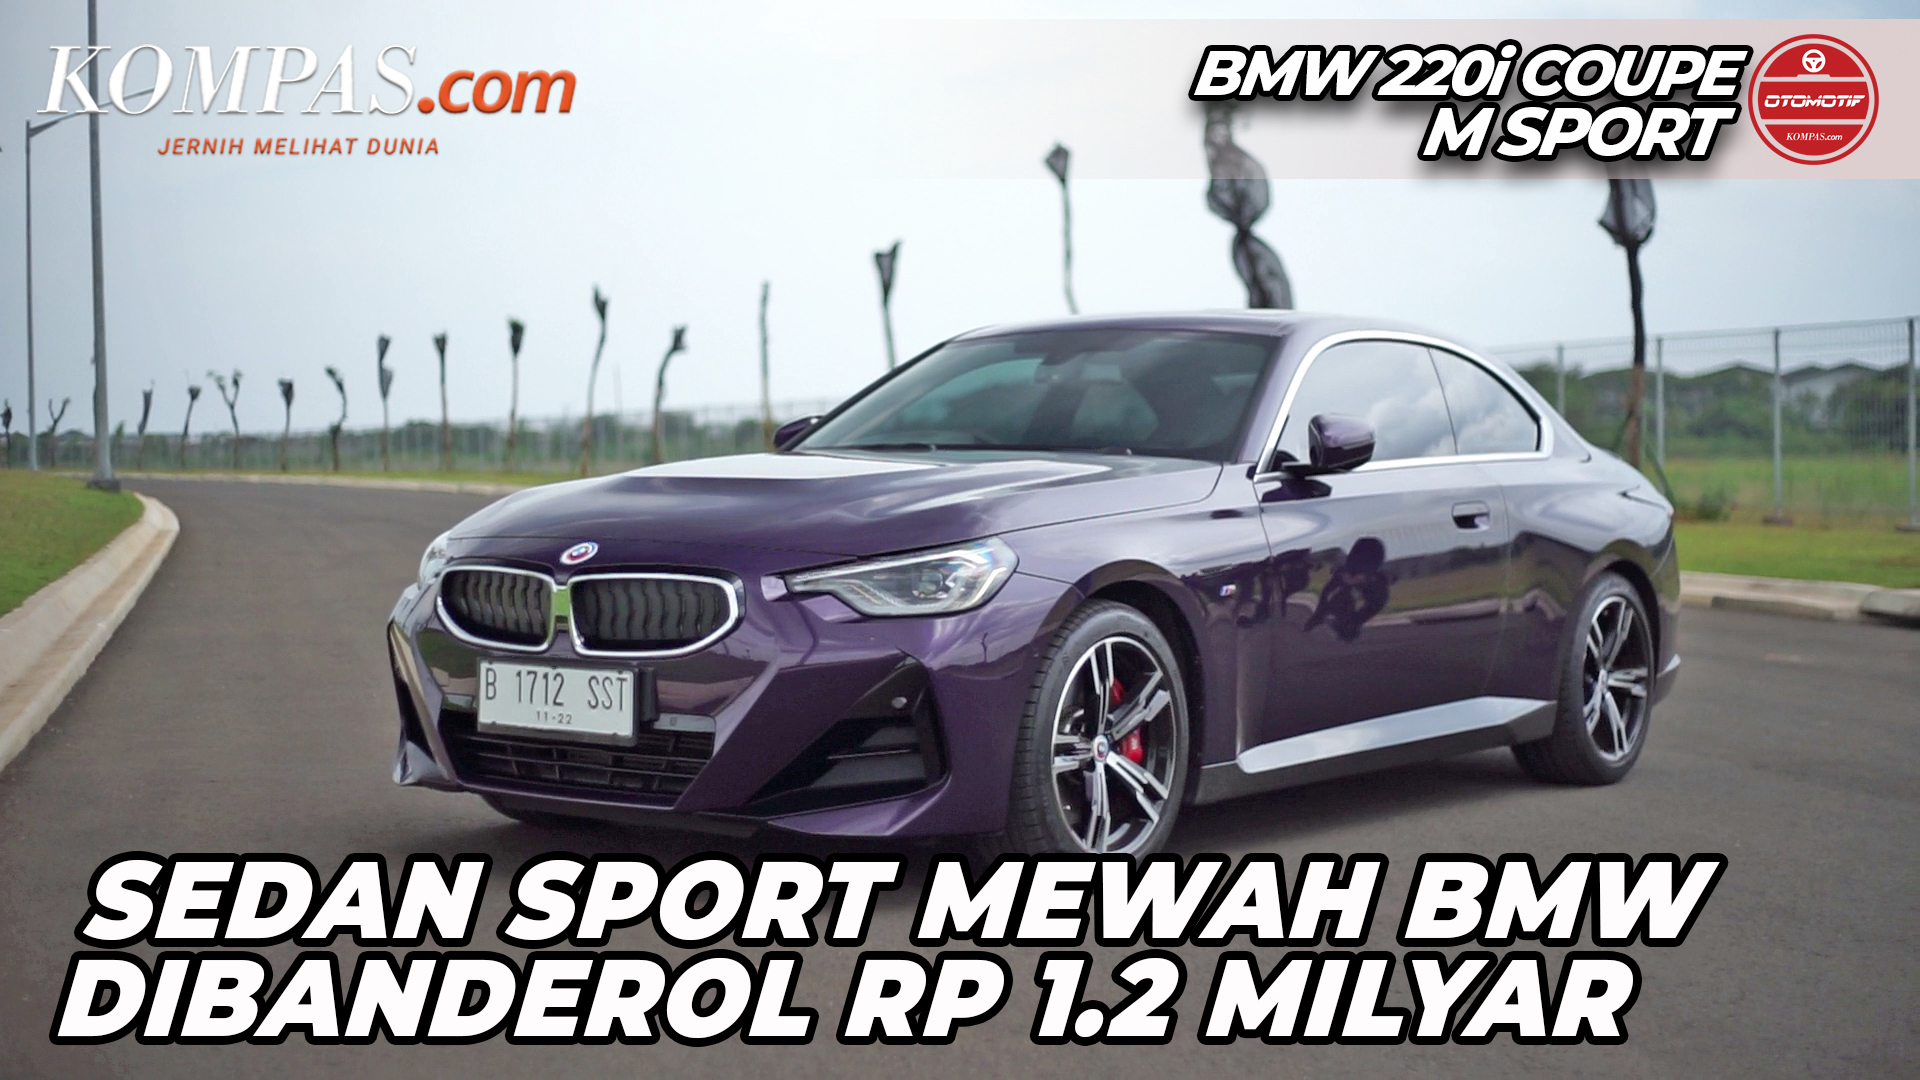 BMW 220i Coupe M Sport | Sedan Sport Mewah BMW Dibanderol Rp 1.2 Milyar